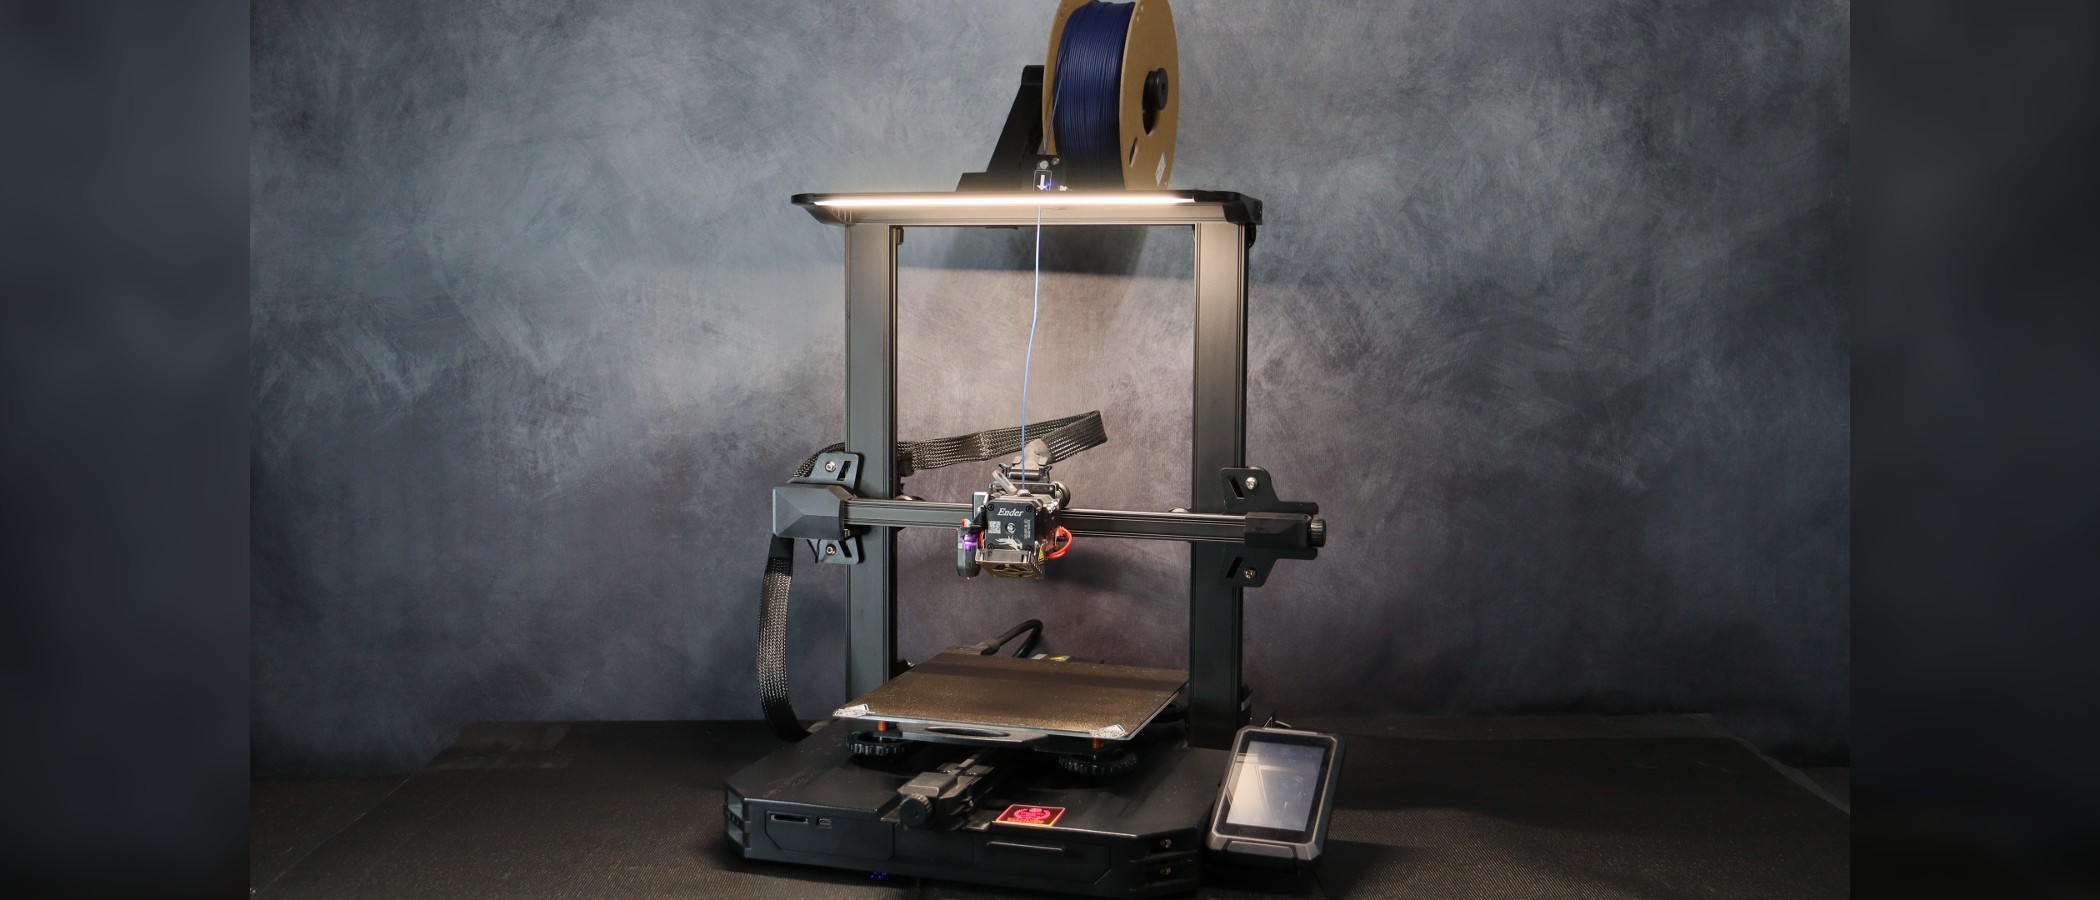 Test] Imprimante 3D Creality Ender 3